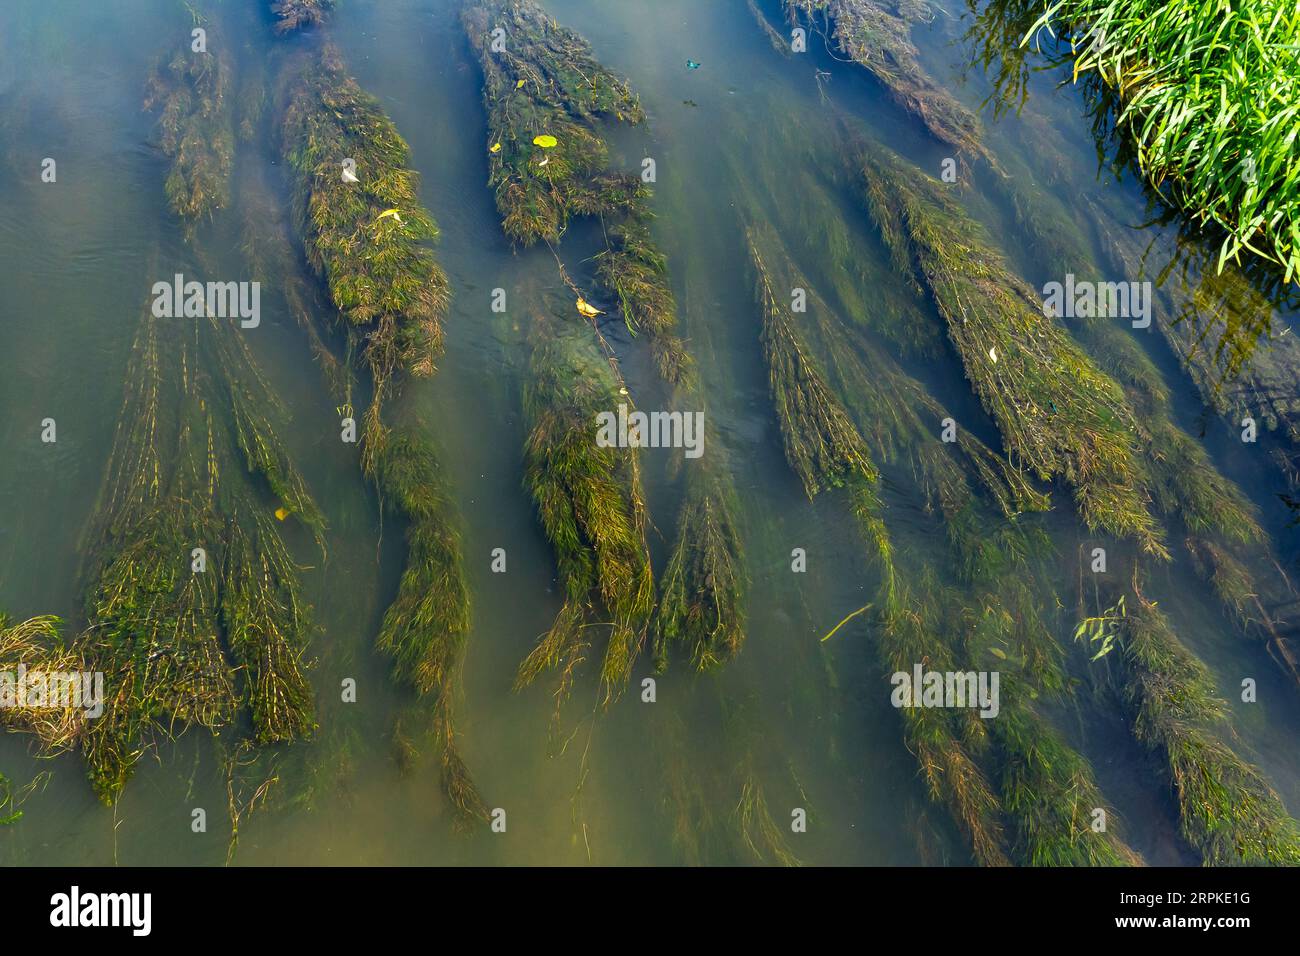 Water plants in the river - Pondweed - Potamogeton natans. Stock Photo